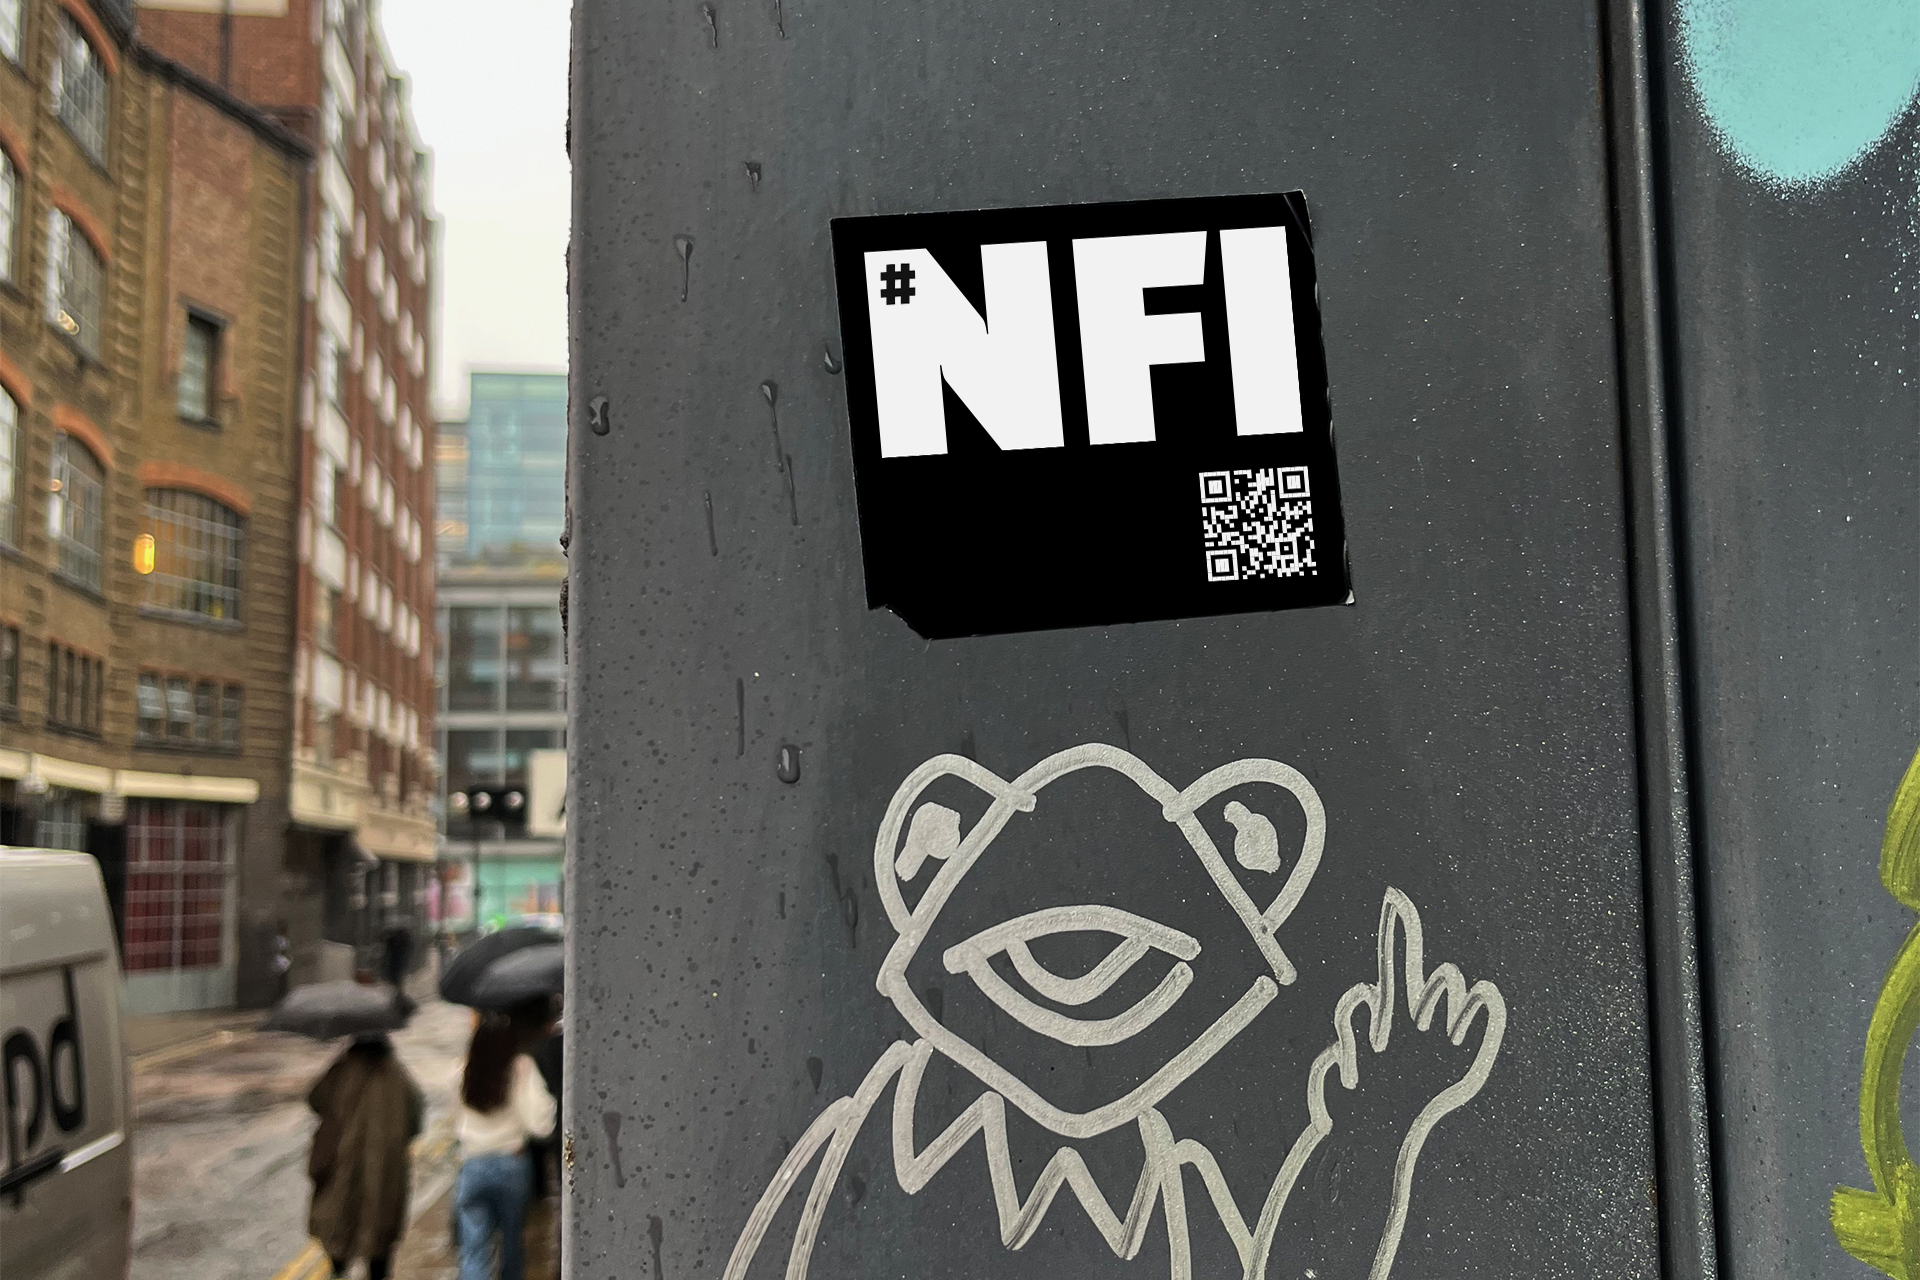 #NFI = No F*cking Idea